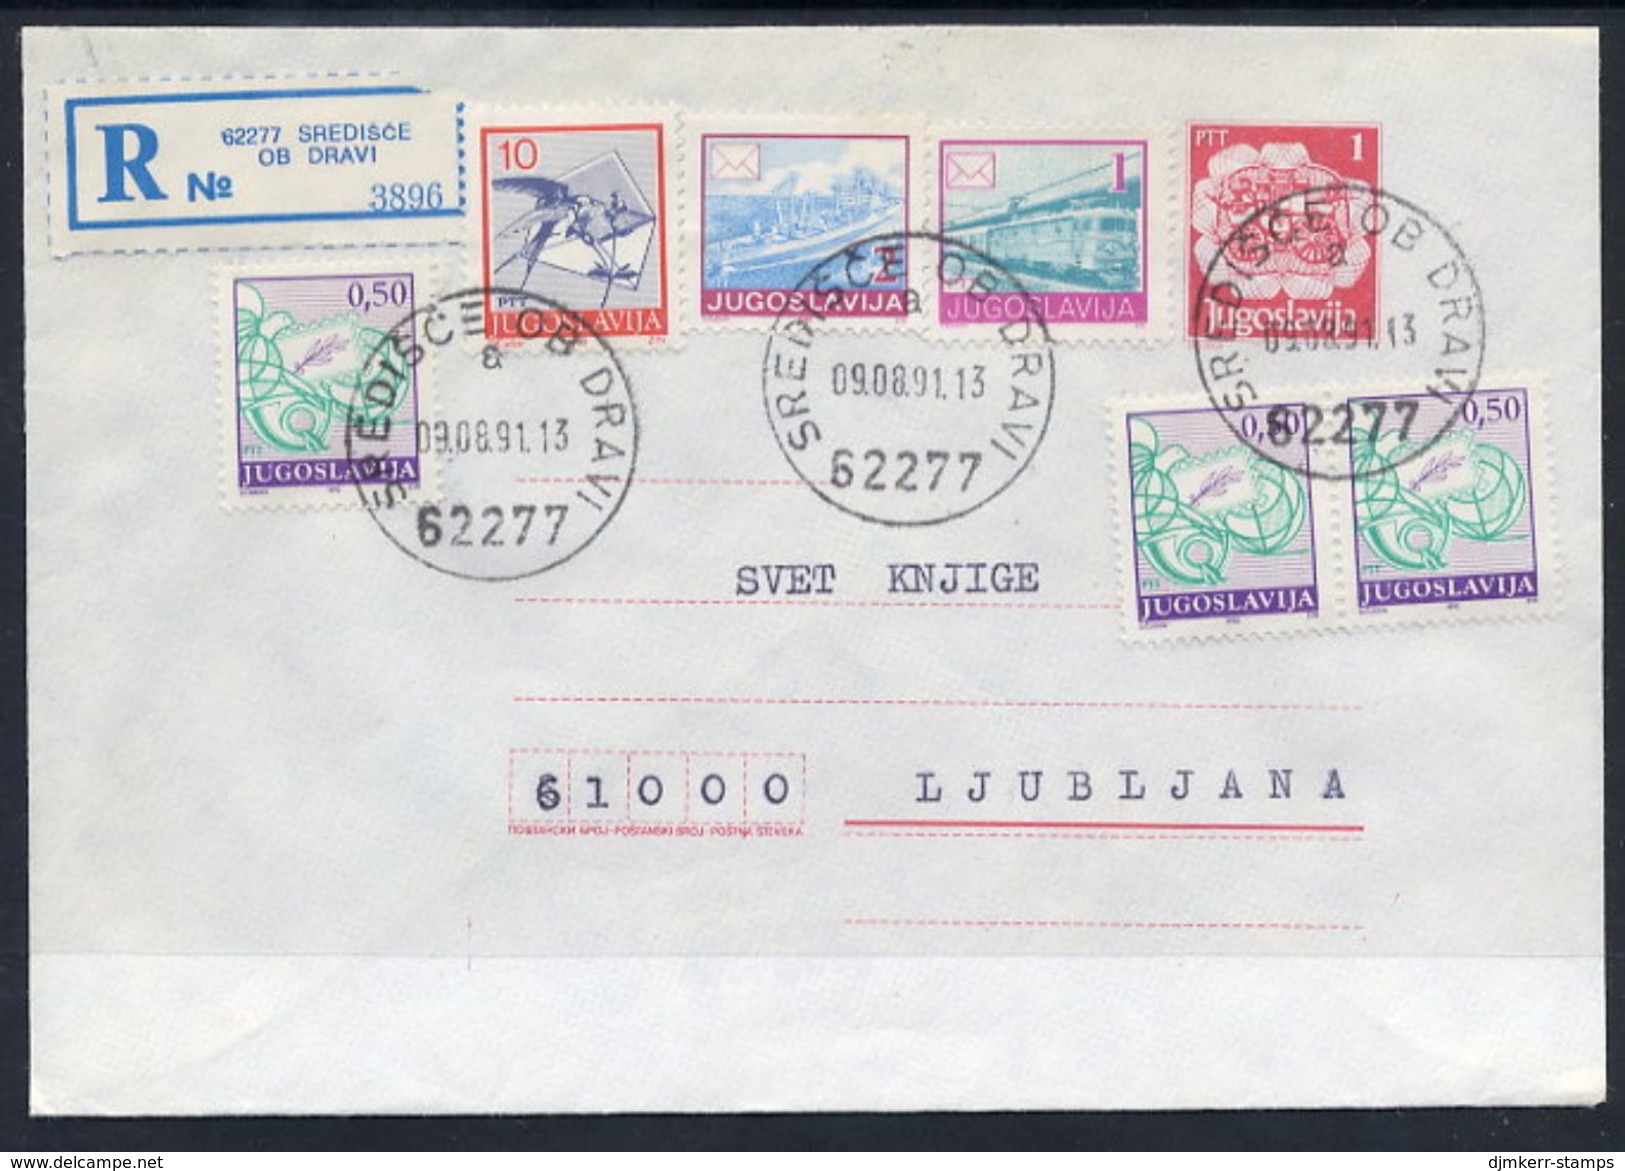 YUGOSLAVIA 1990 Mailcoach 1 D. Stationery Envelope Used With Additional Franking.  Michel U95 - Postal Stationery